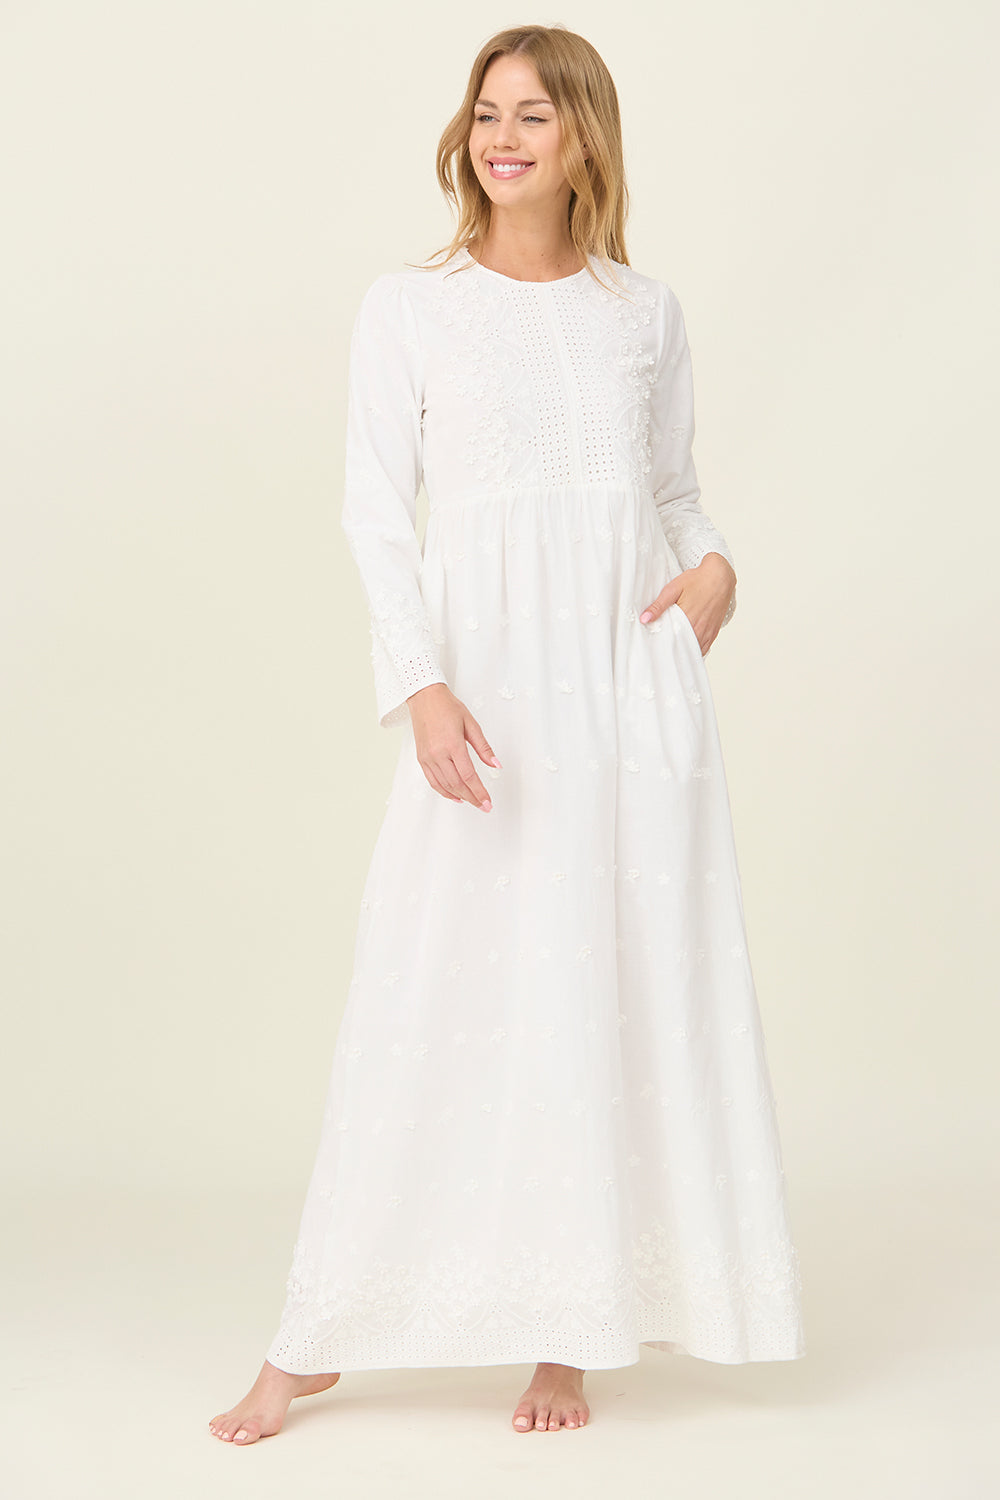 Florence White Temple Dress / Simple Wedding Dress